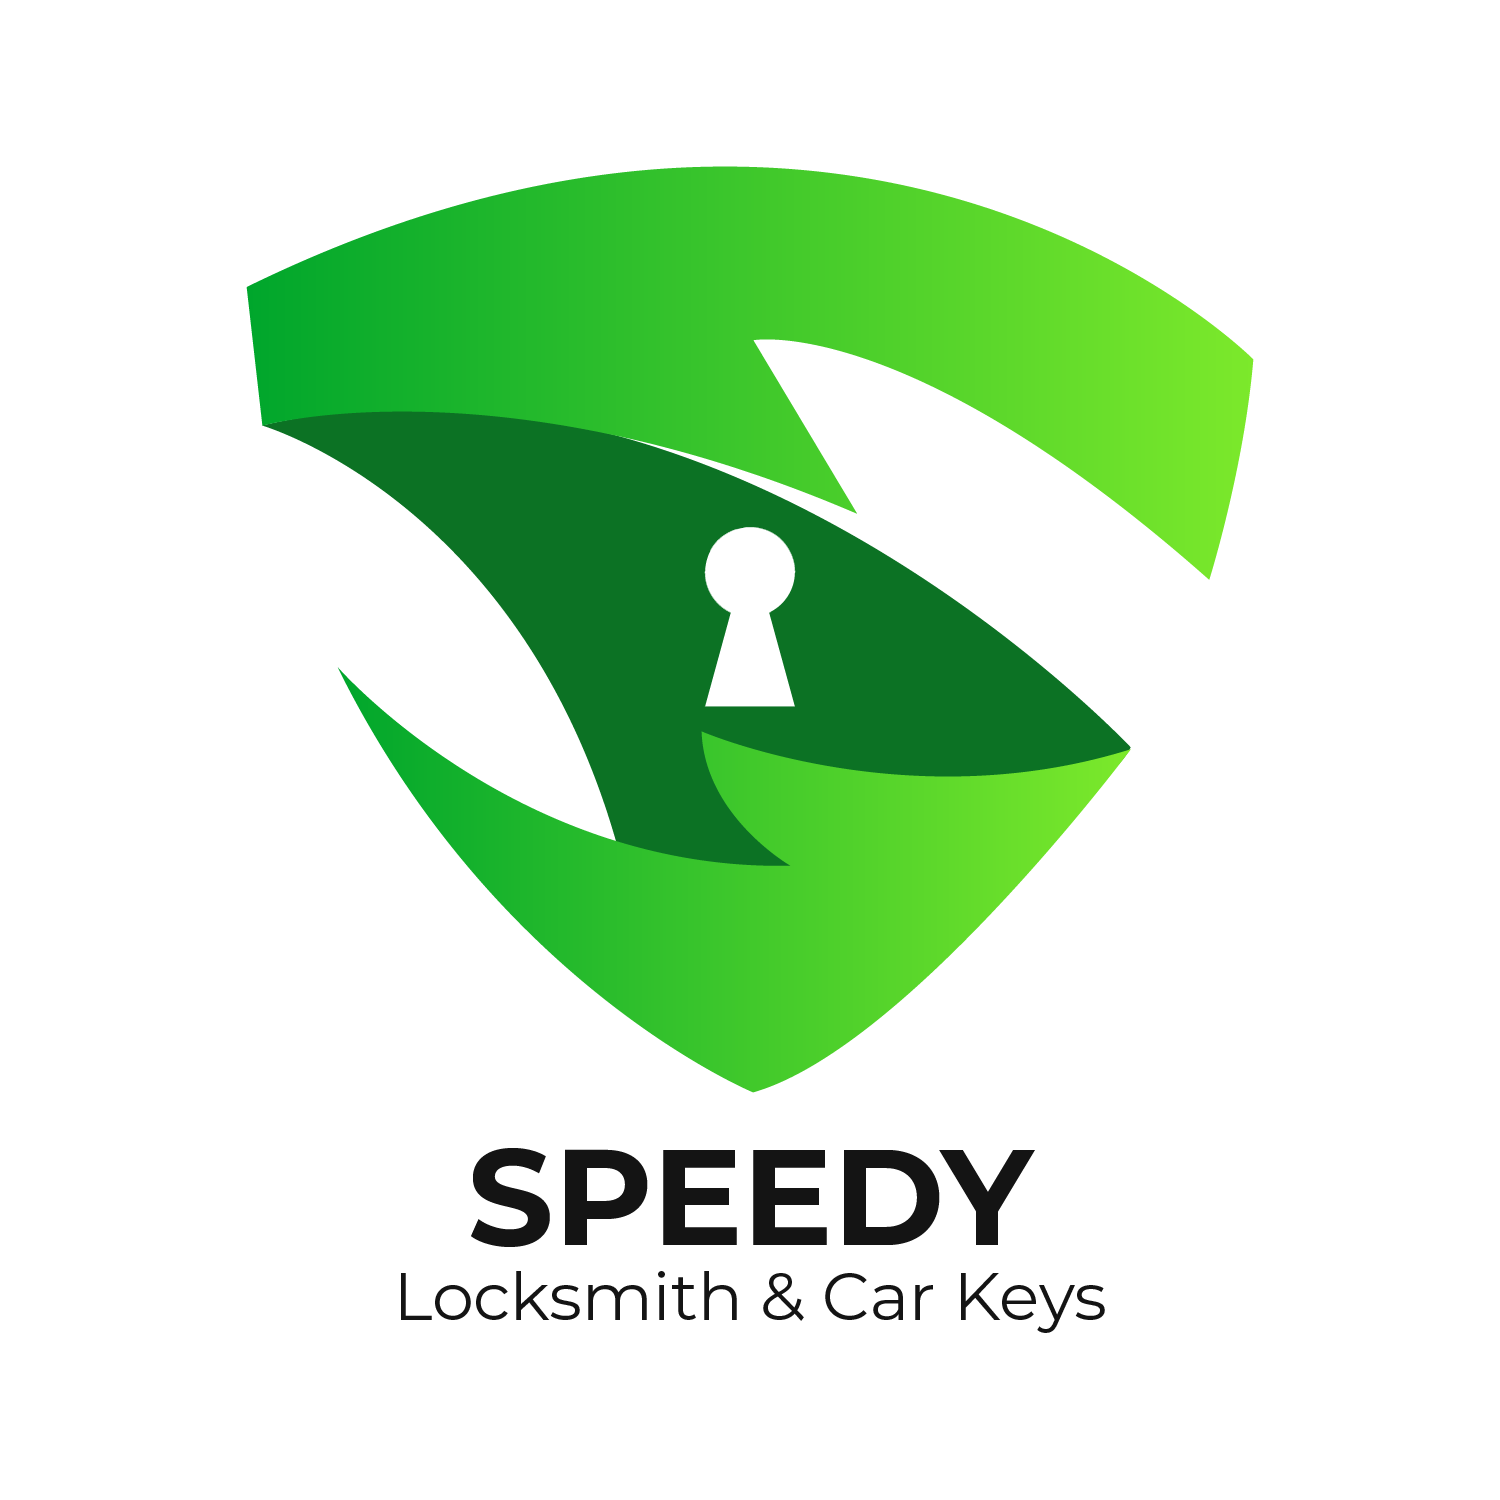 Speedy Locksmith & Car Keys